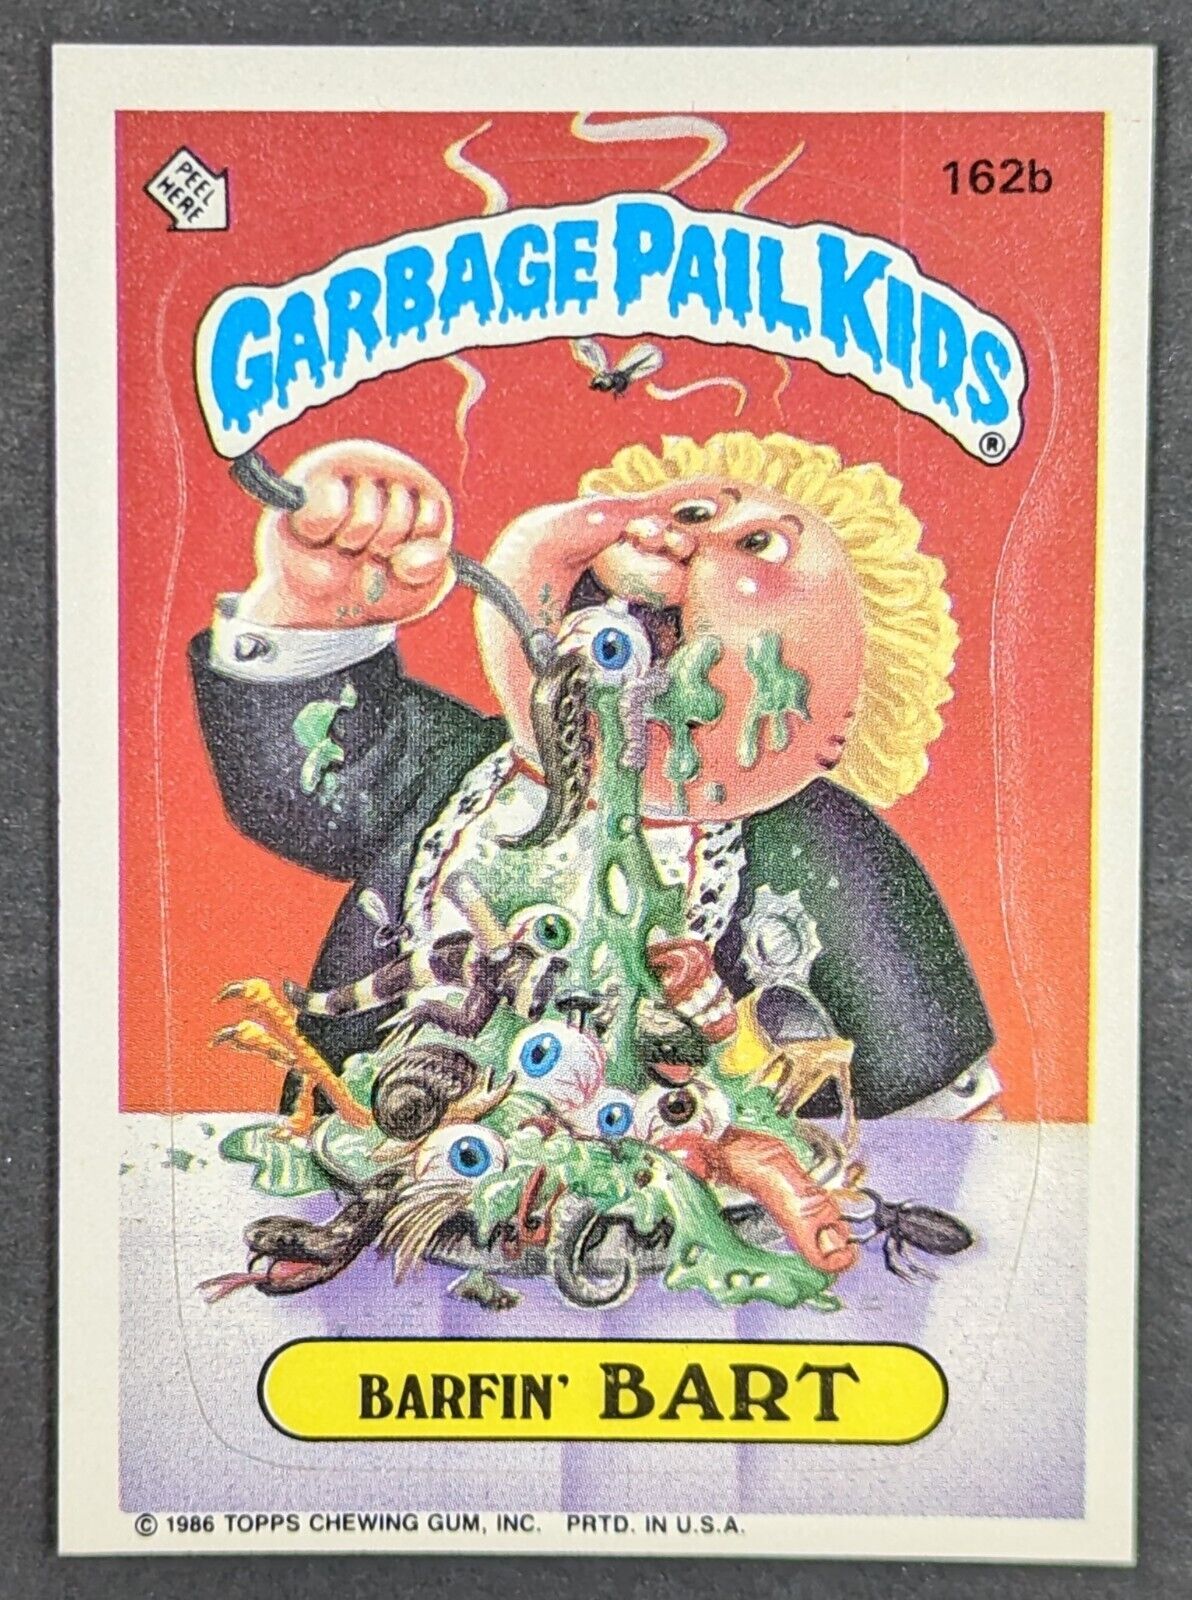 Vintage 1986 Barfin Bart Garbage Pail Kids Topps Sticker Card #162b (NM)